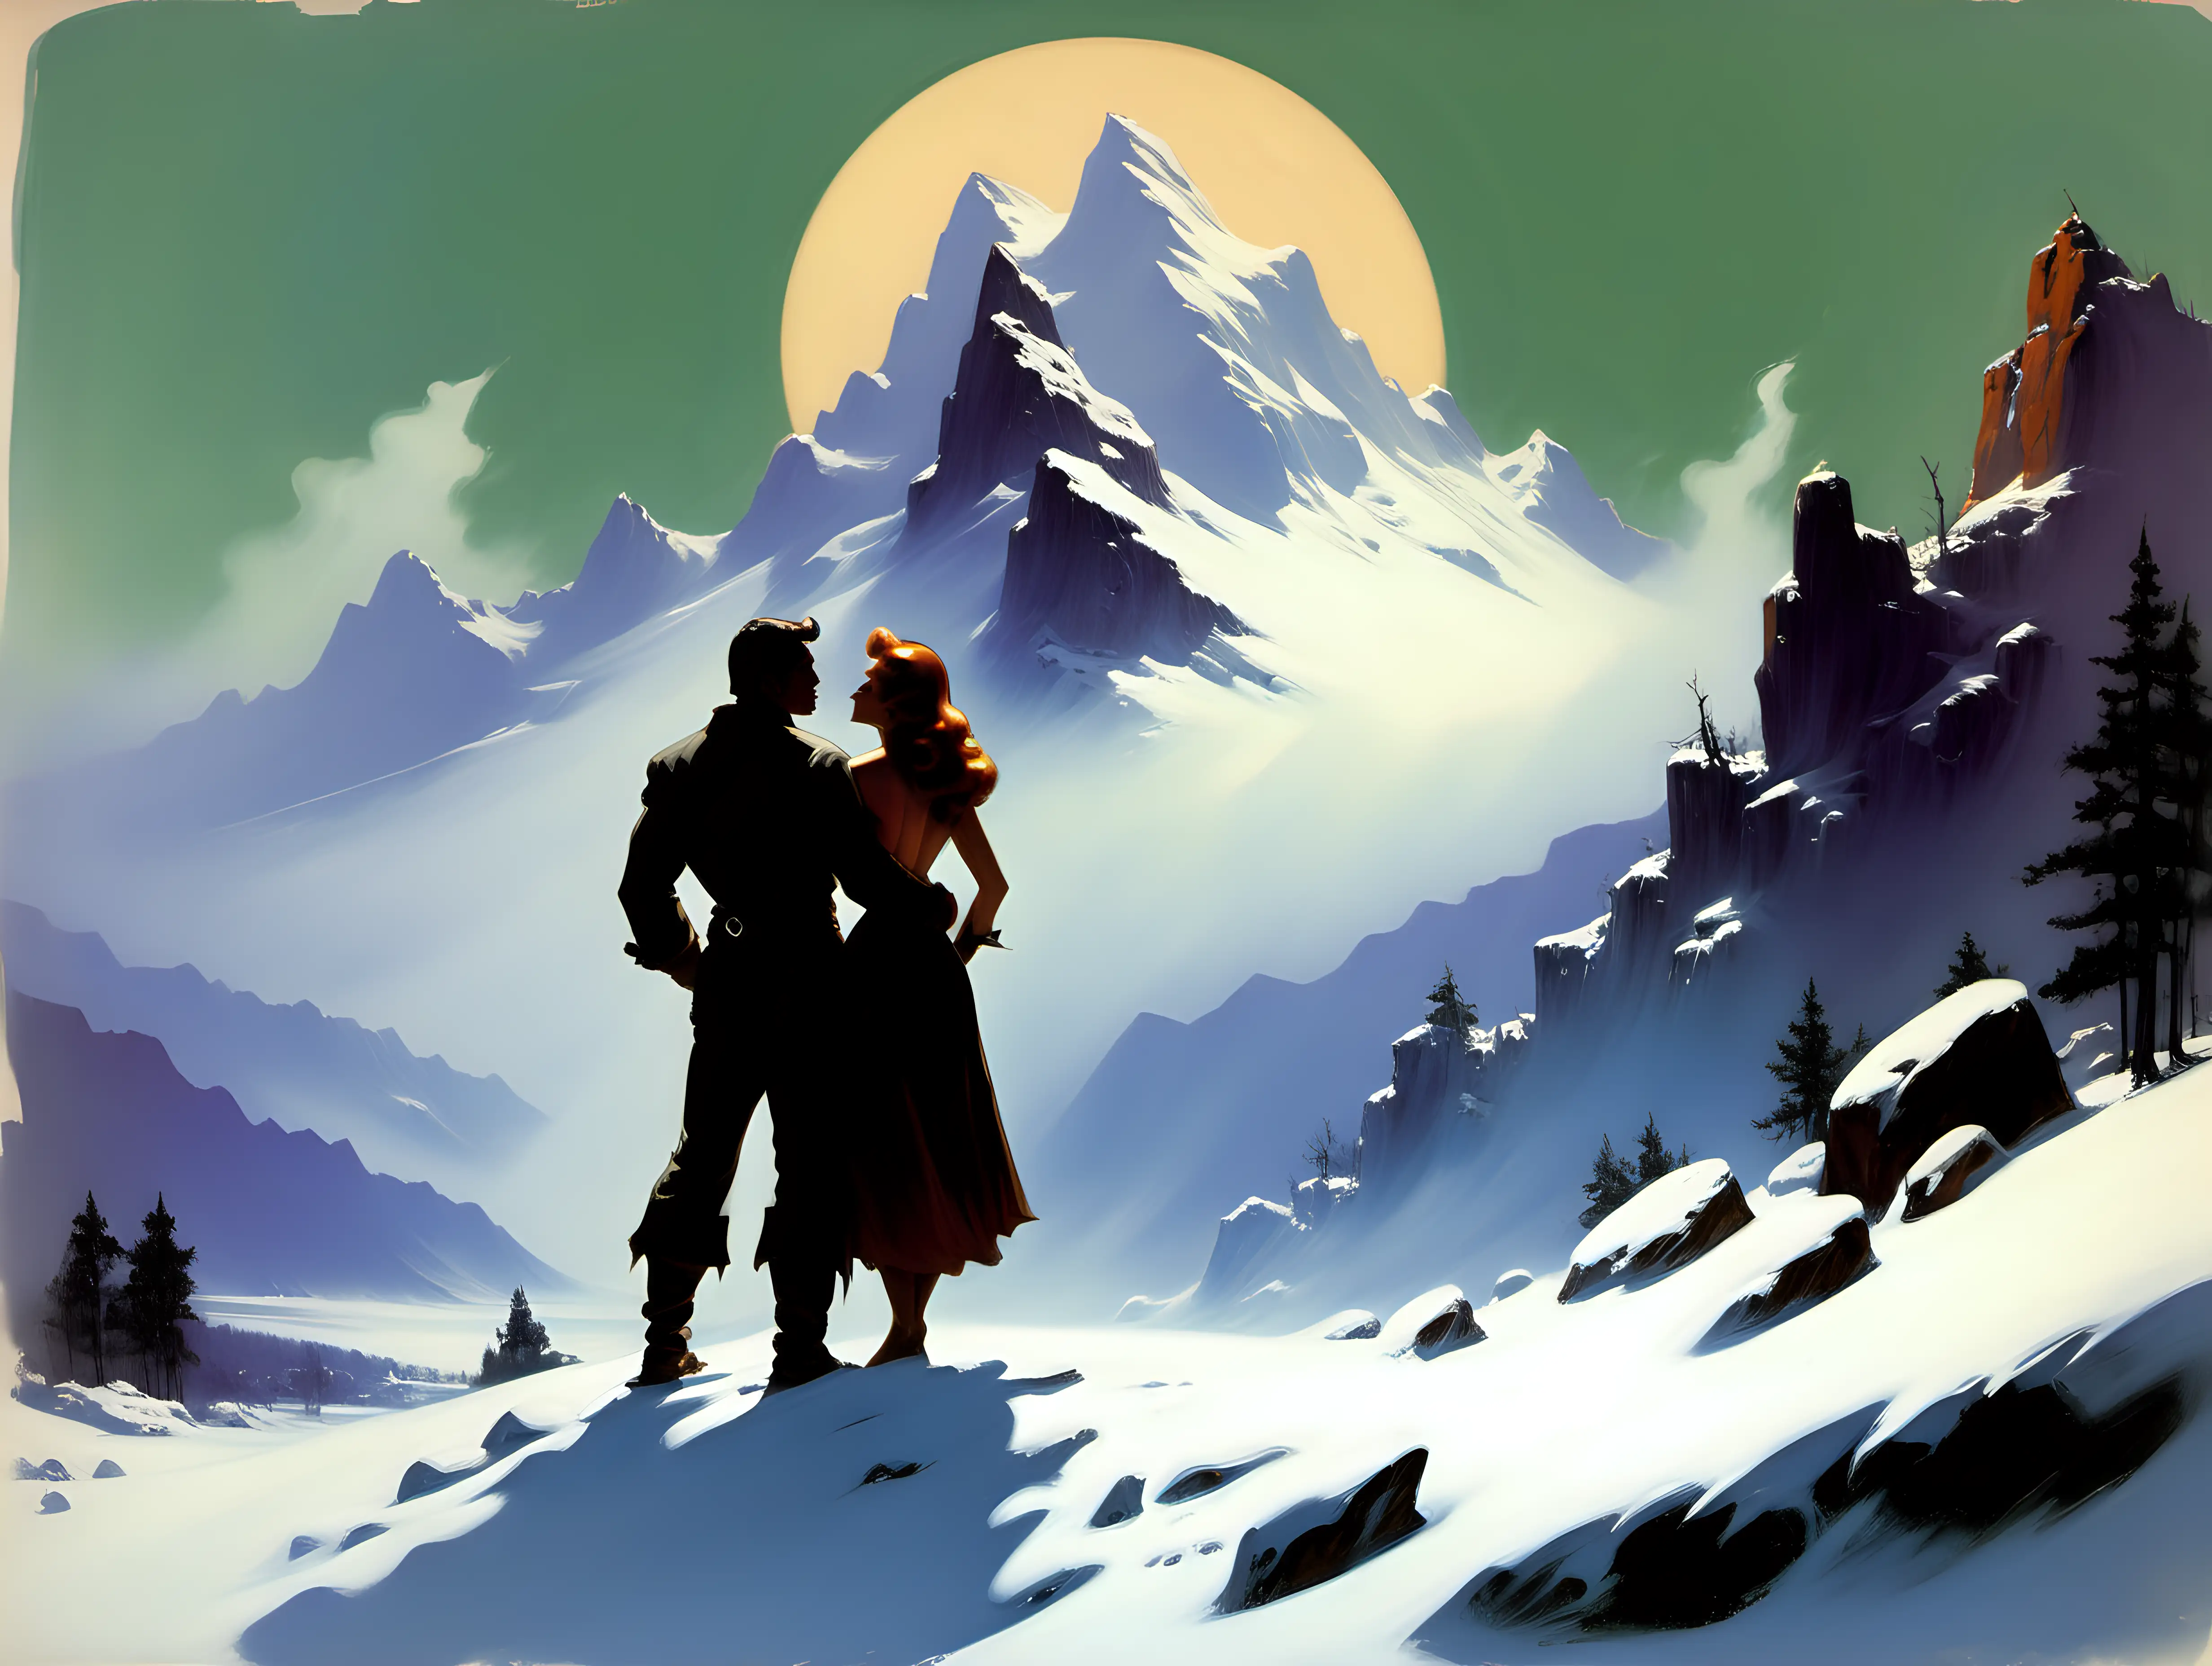 Romantic Lovers Admiring SnowCapped Mountain in Frank Frazetta Style